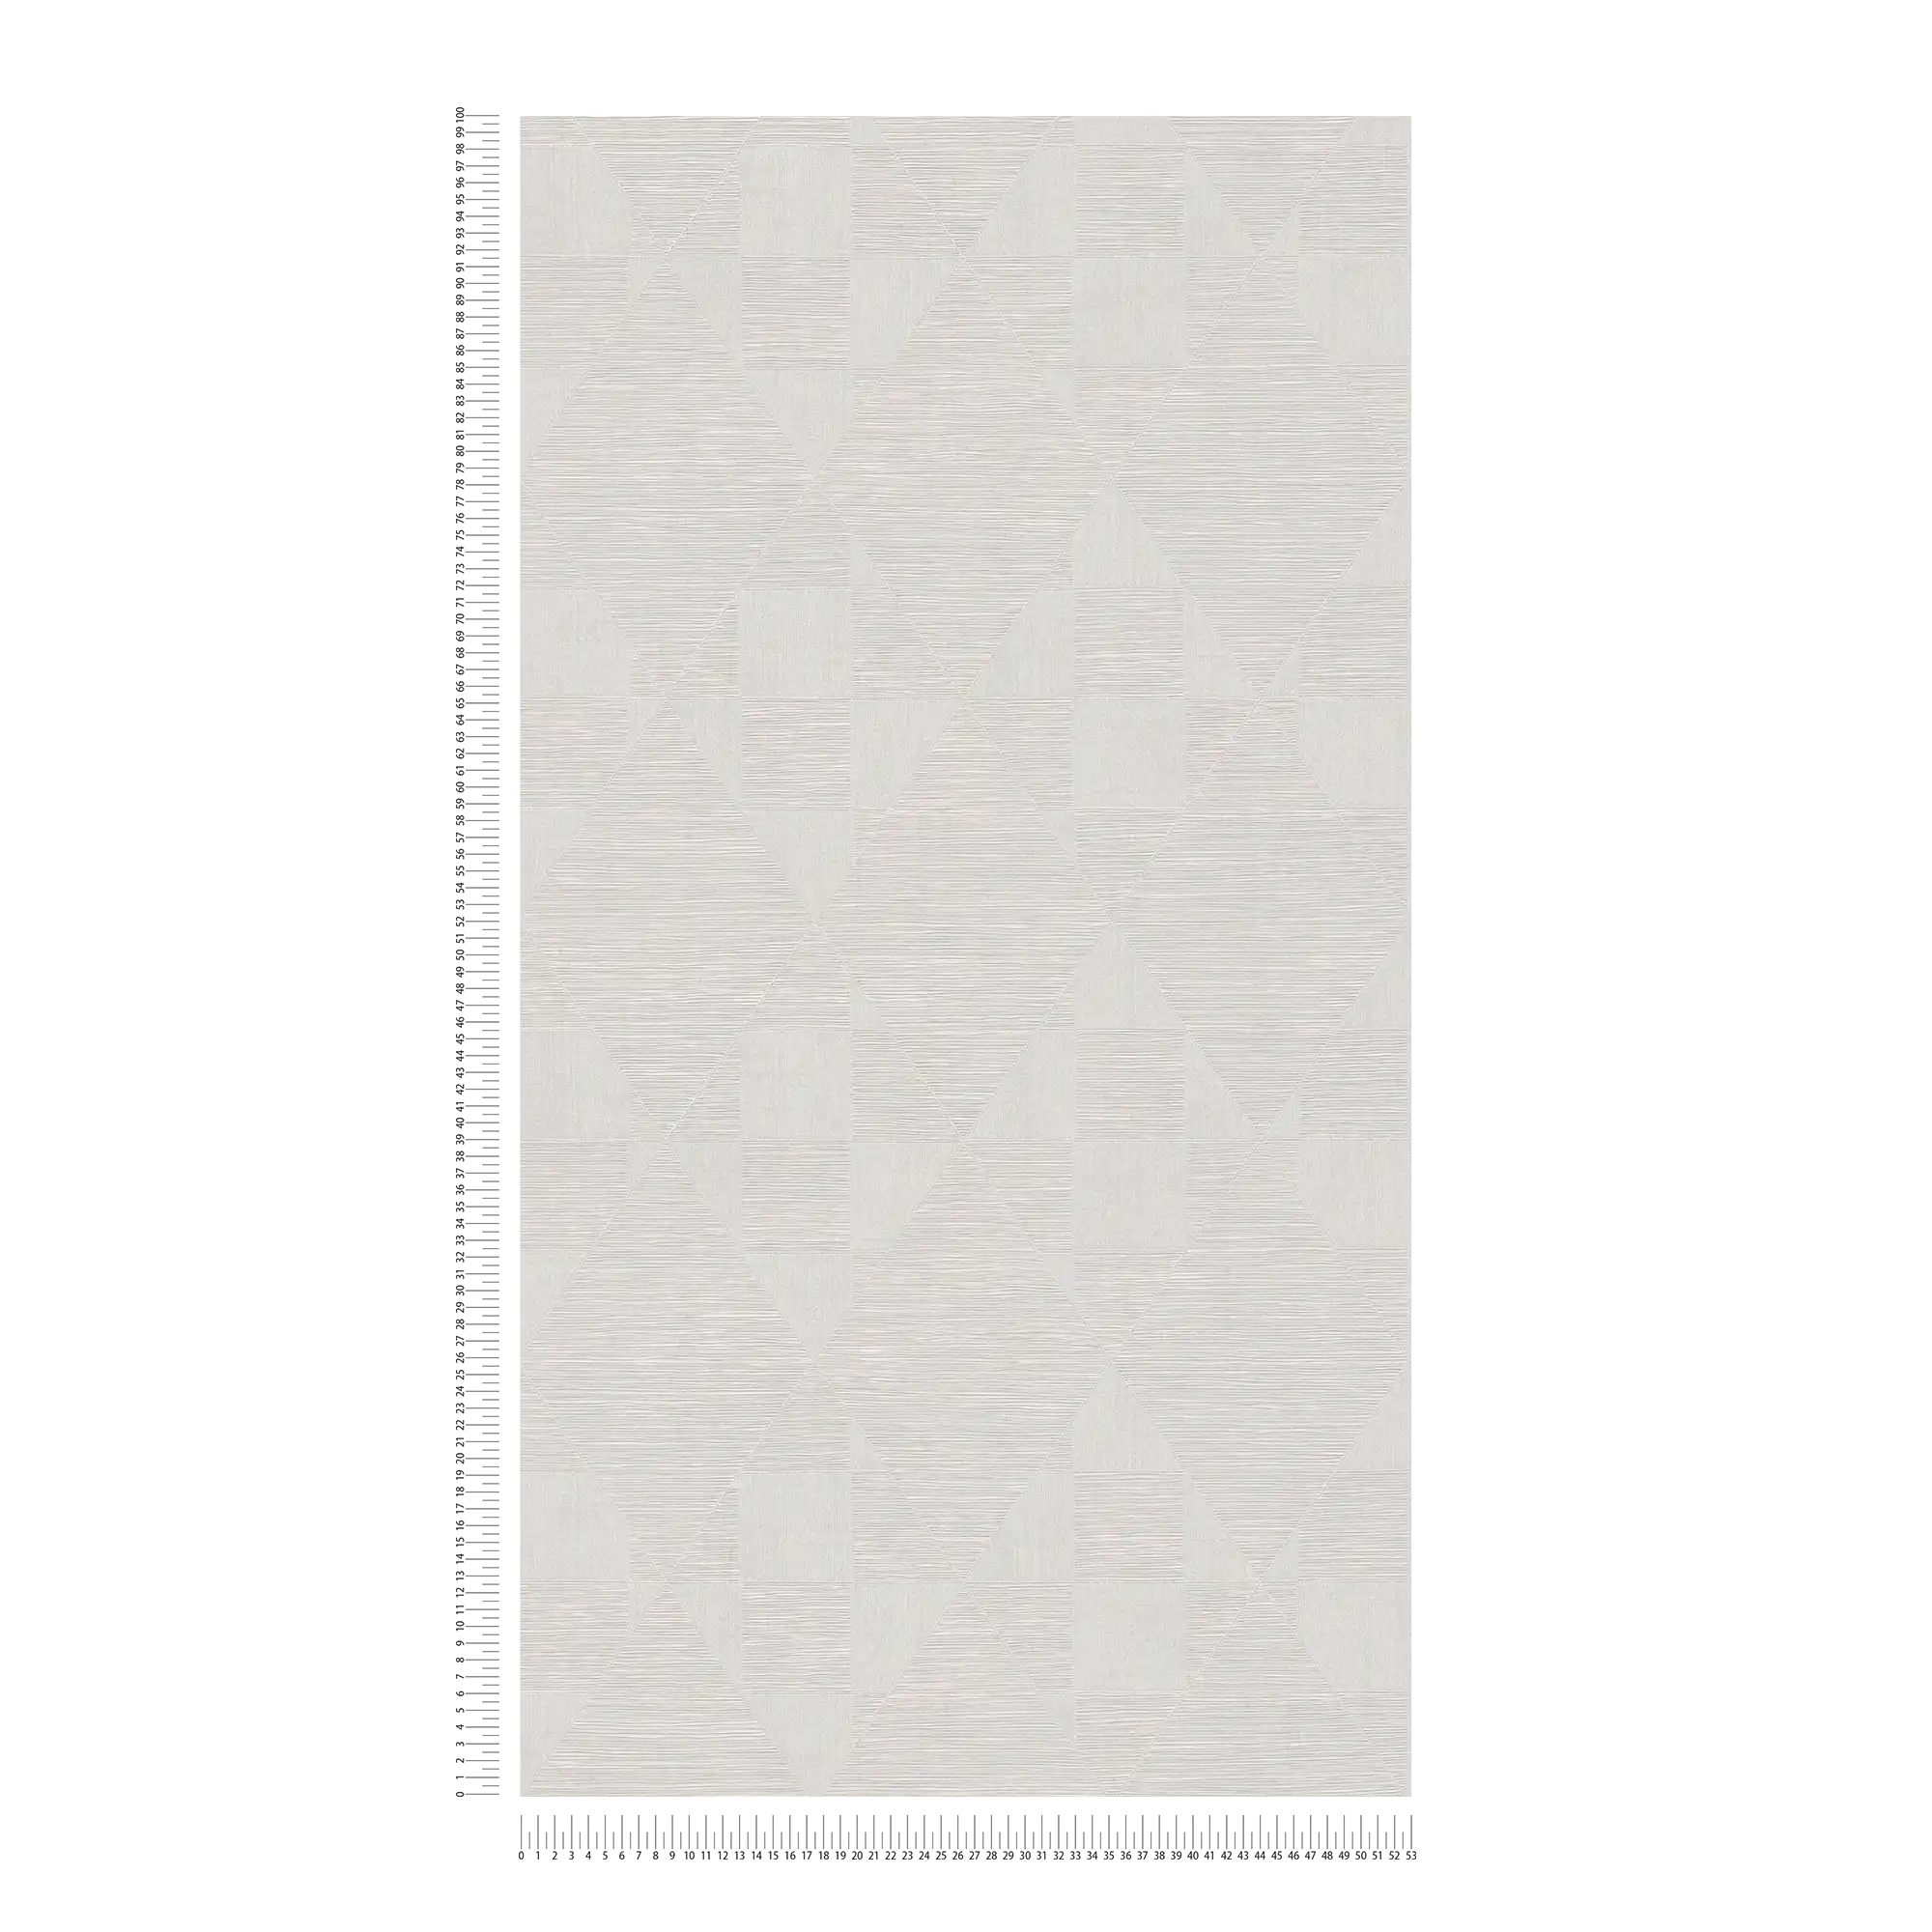             Carta da parati metallizzata con motivo a struttura geometrica - beige, crema
        